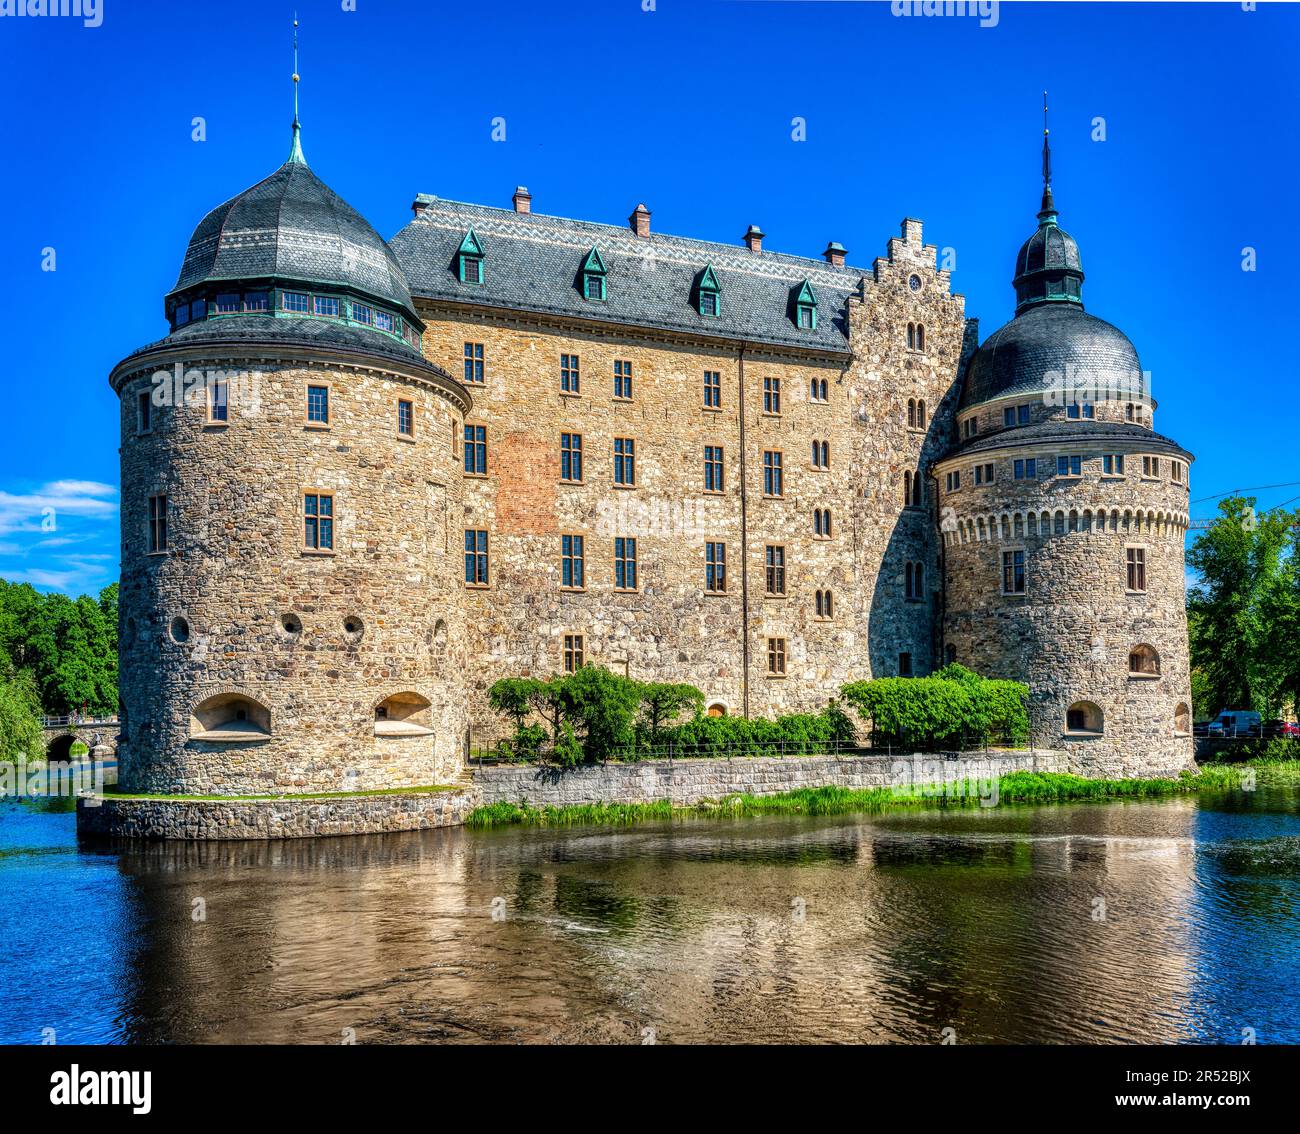 The old Castle in Örebro Stock Photo